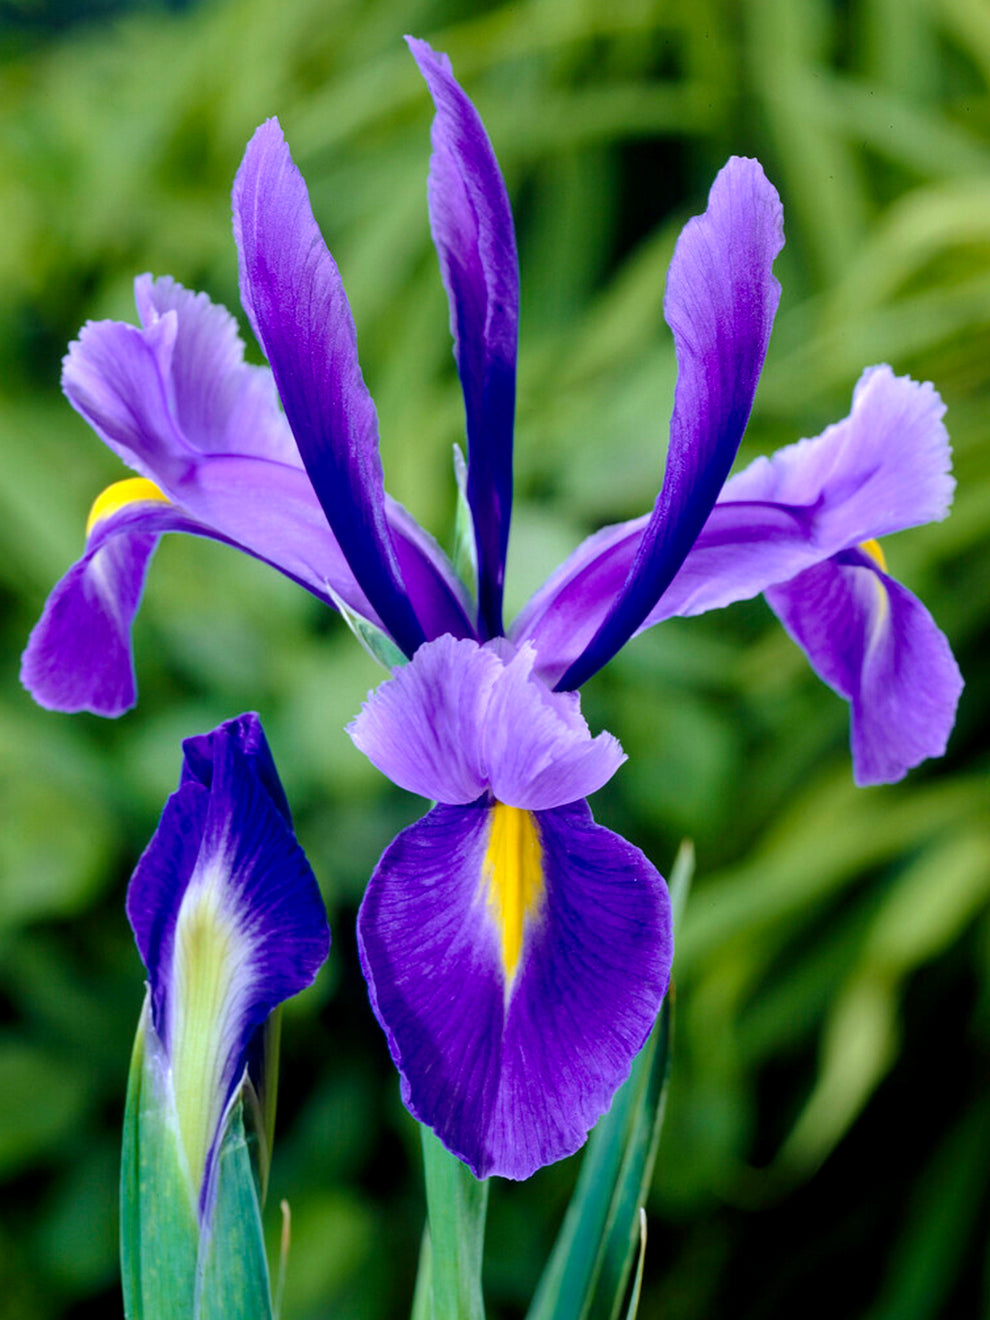 blue purple yellow